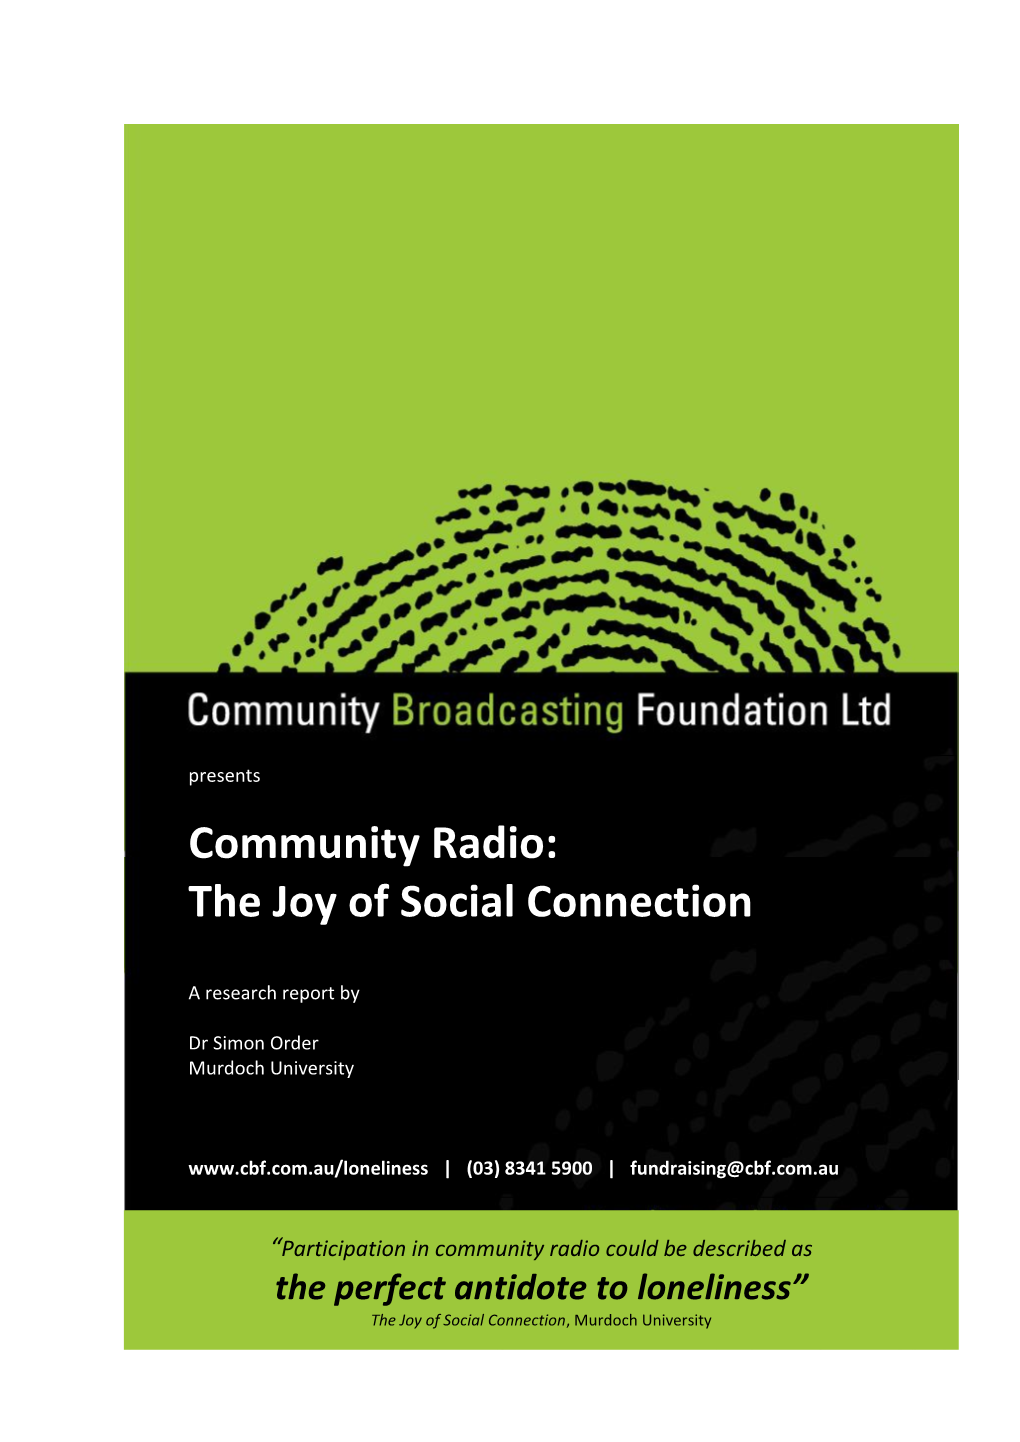 Community Radio: the Joy of Social Connection